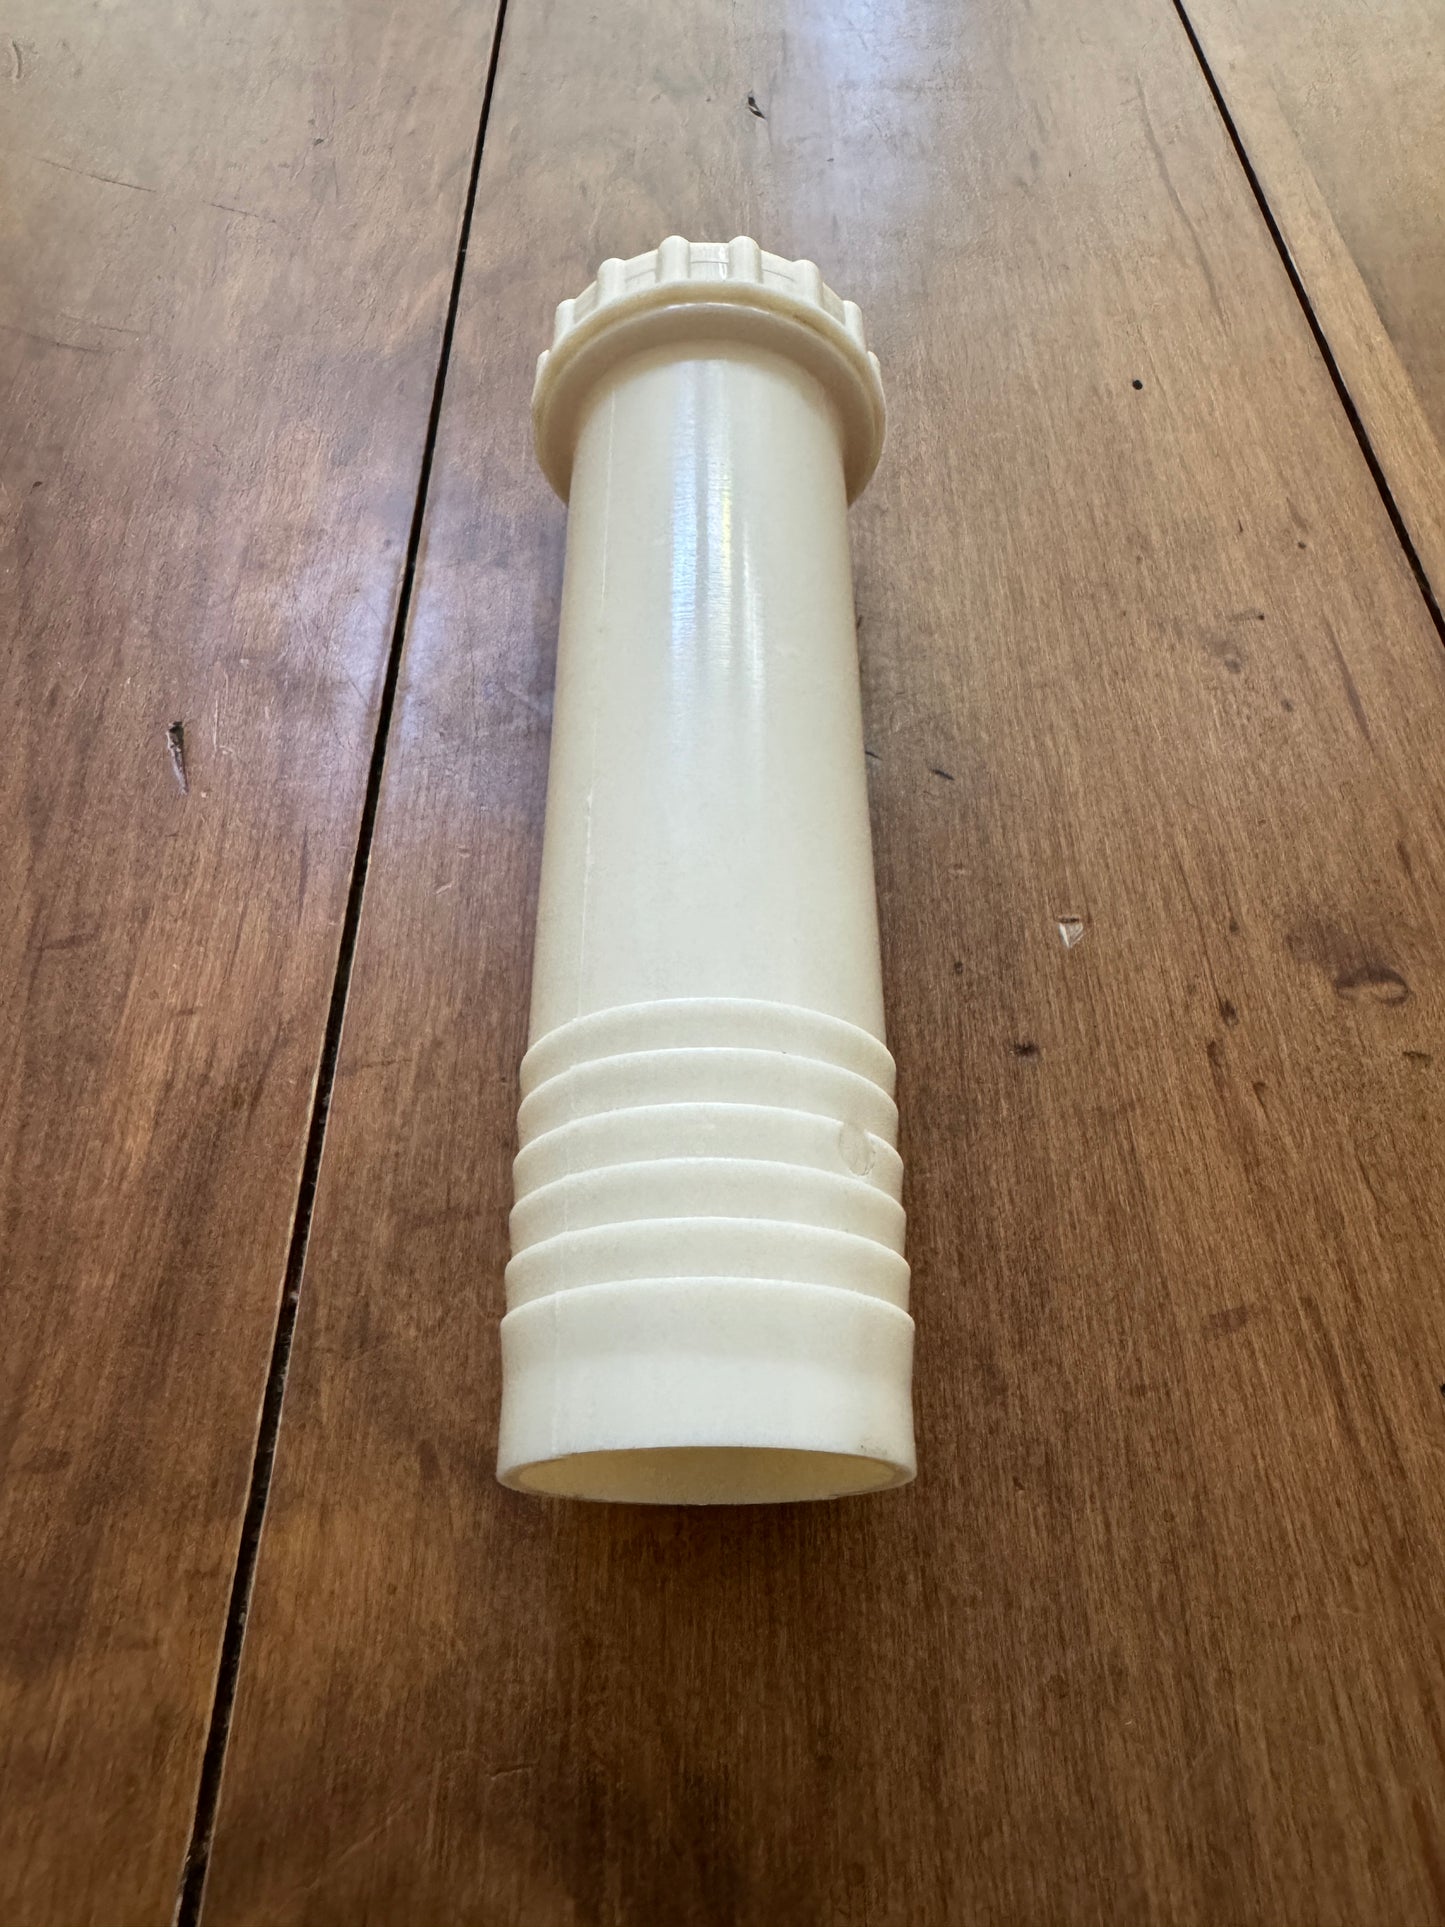 Westfalia filler tube and cap for water tank in White